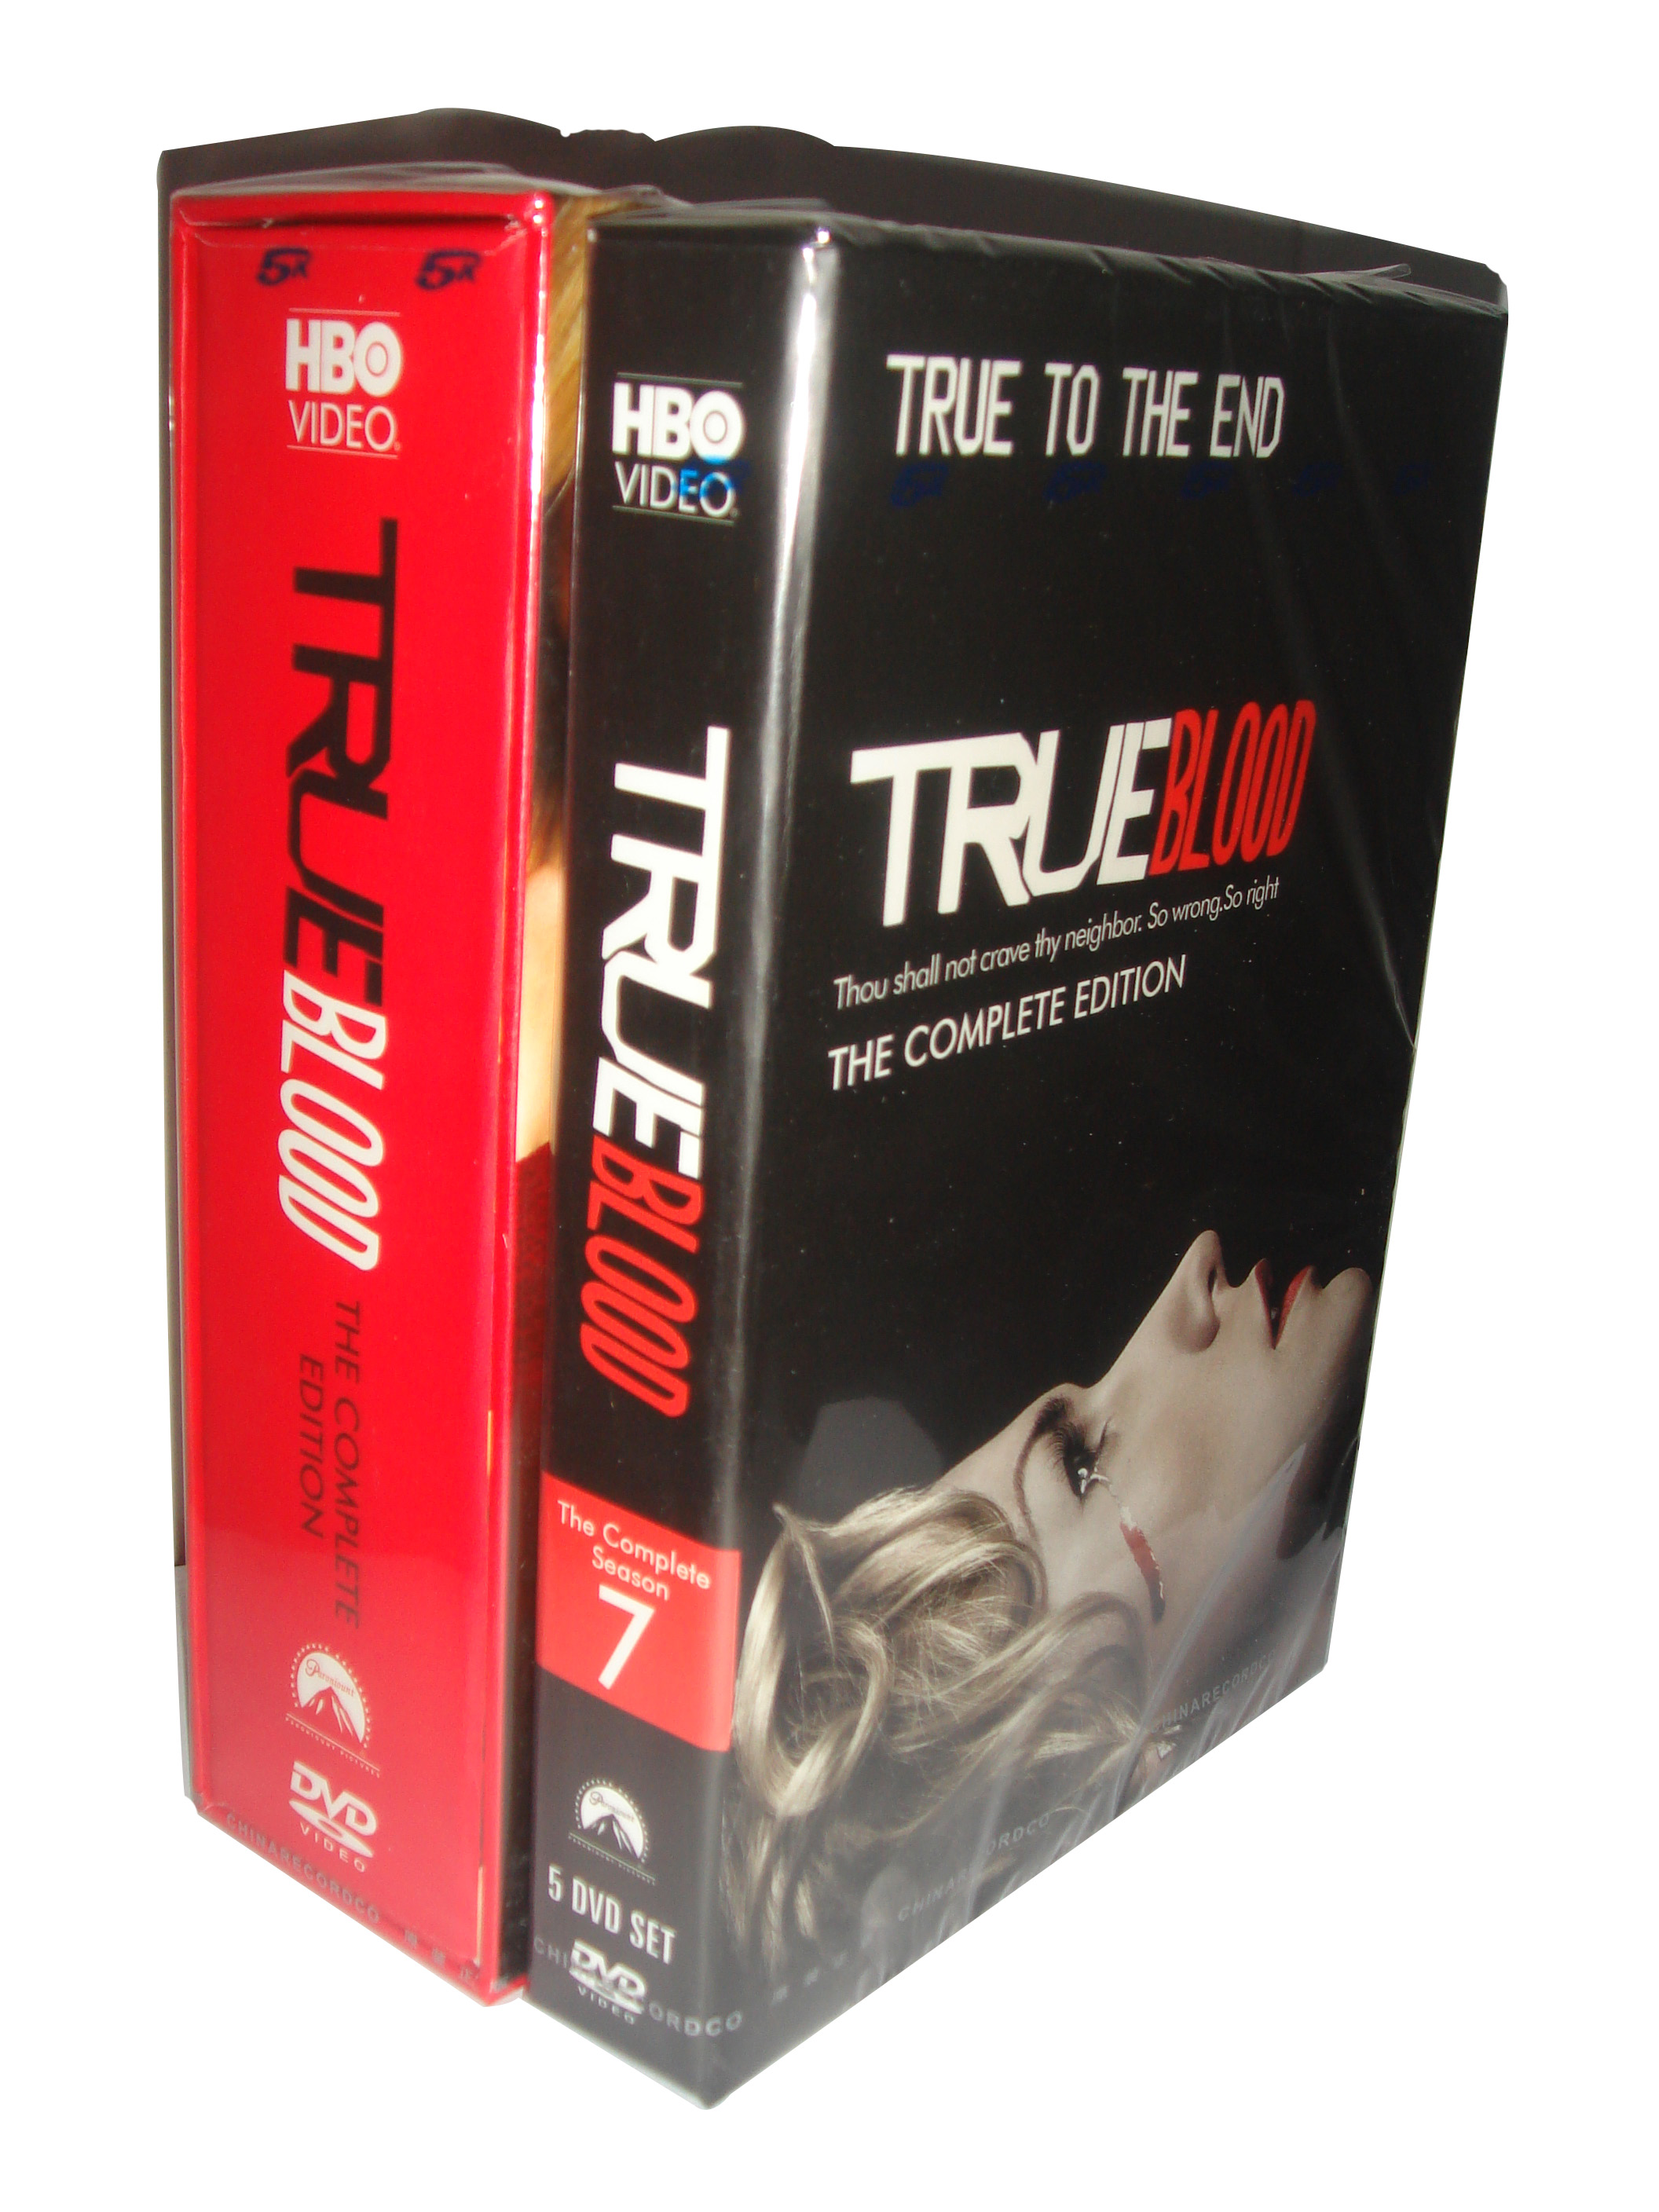 True Blood Seasons 1-7 DVD Box Set